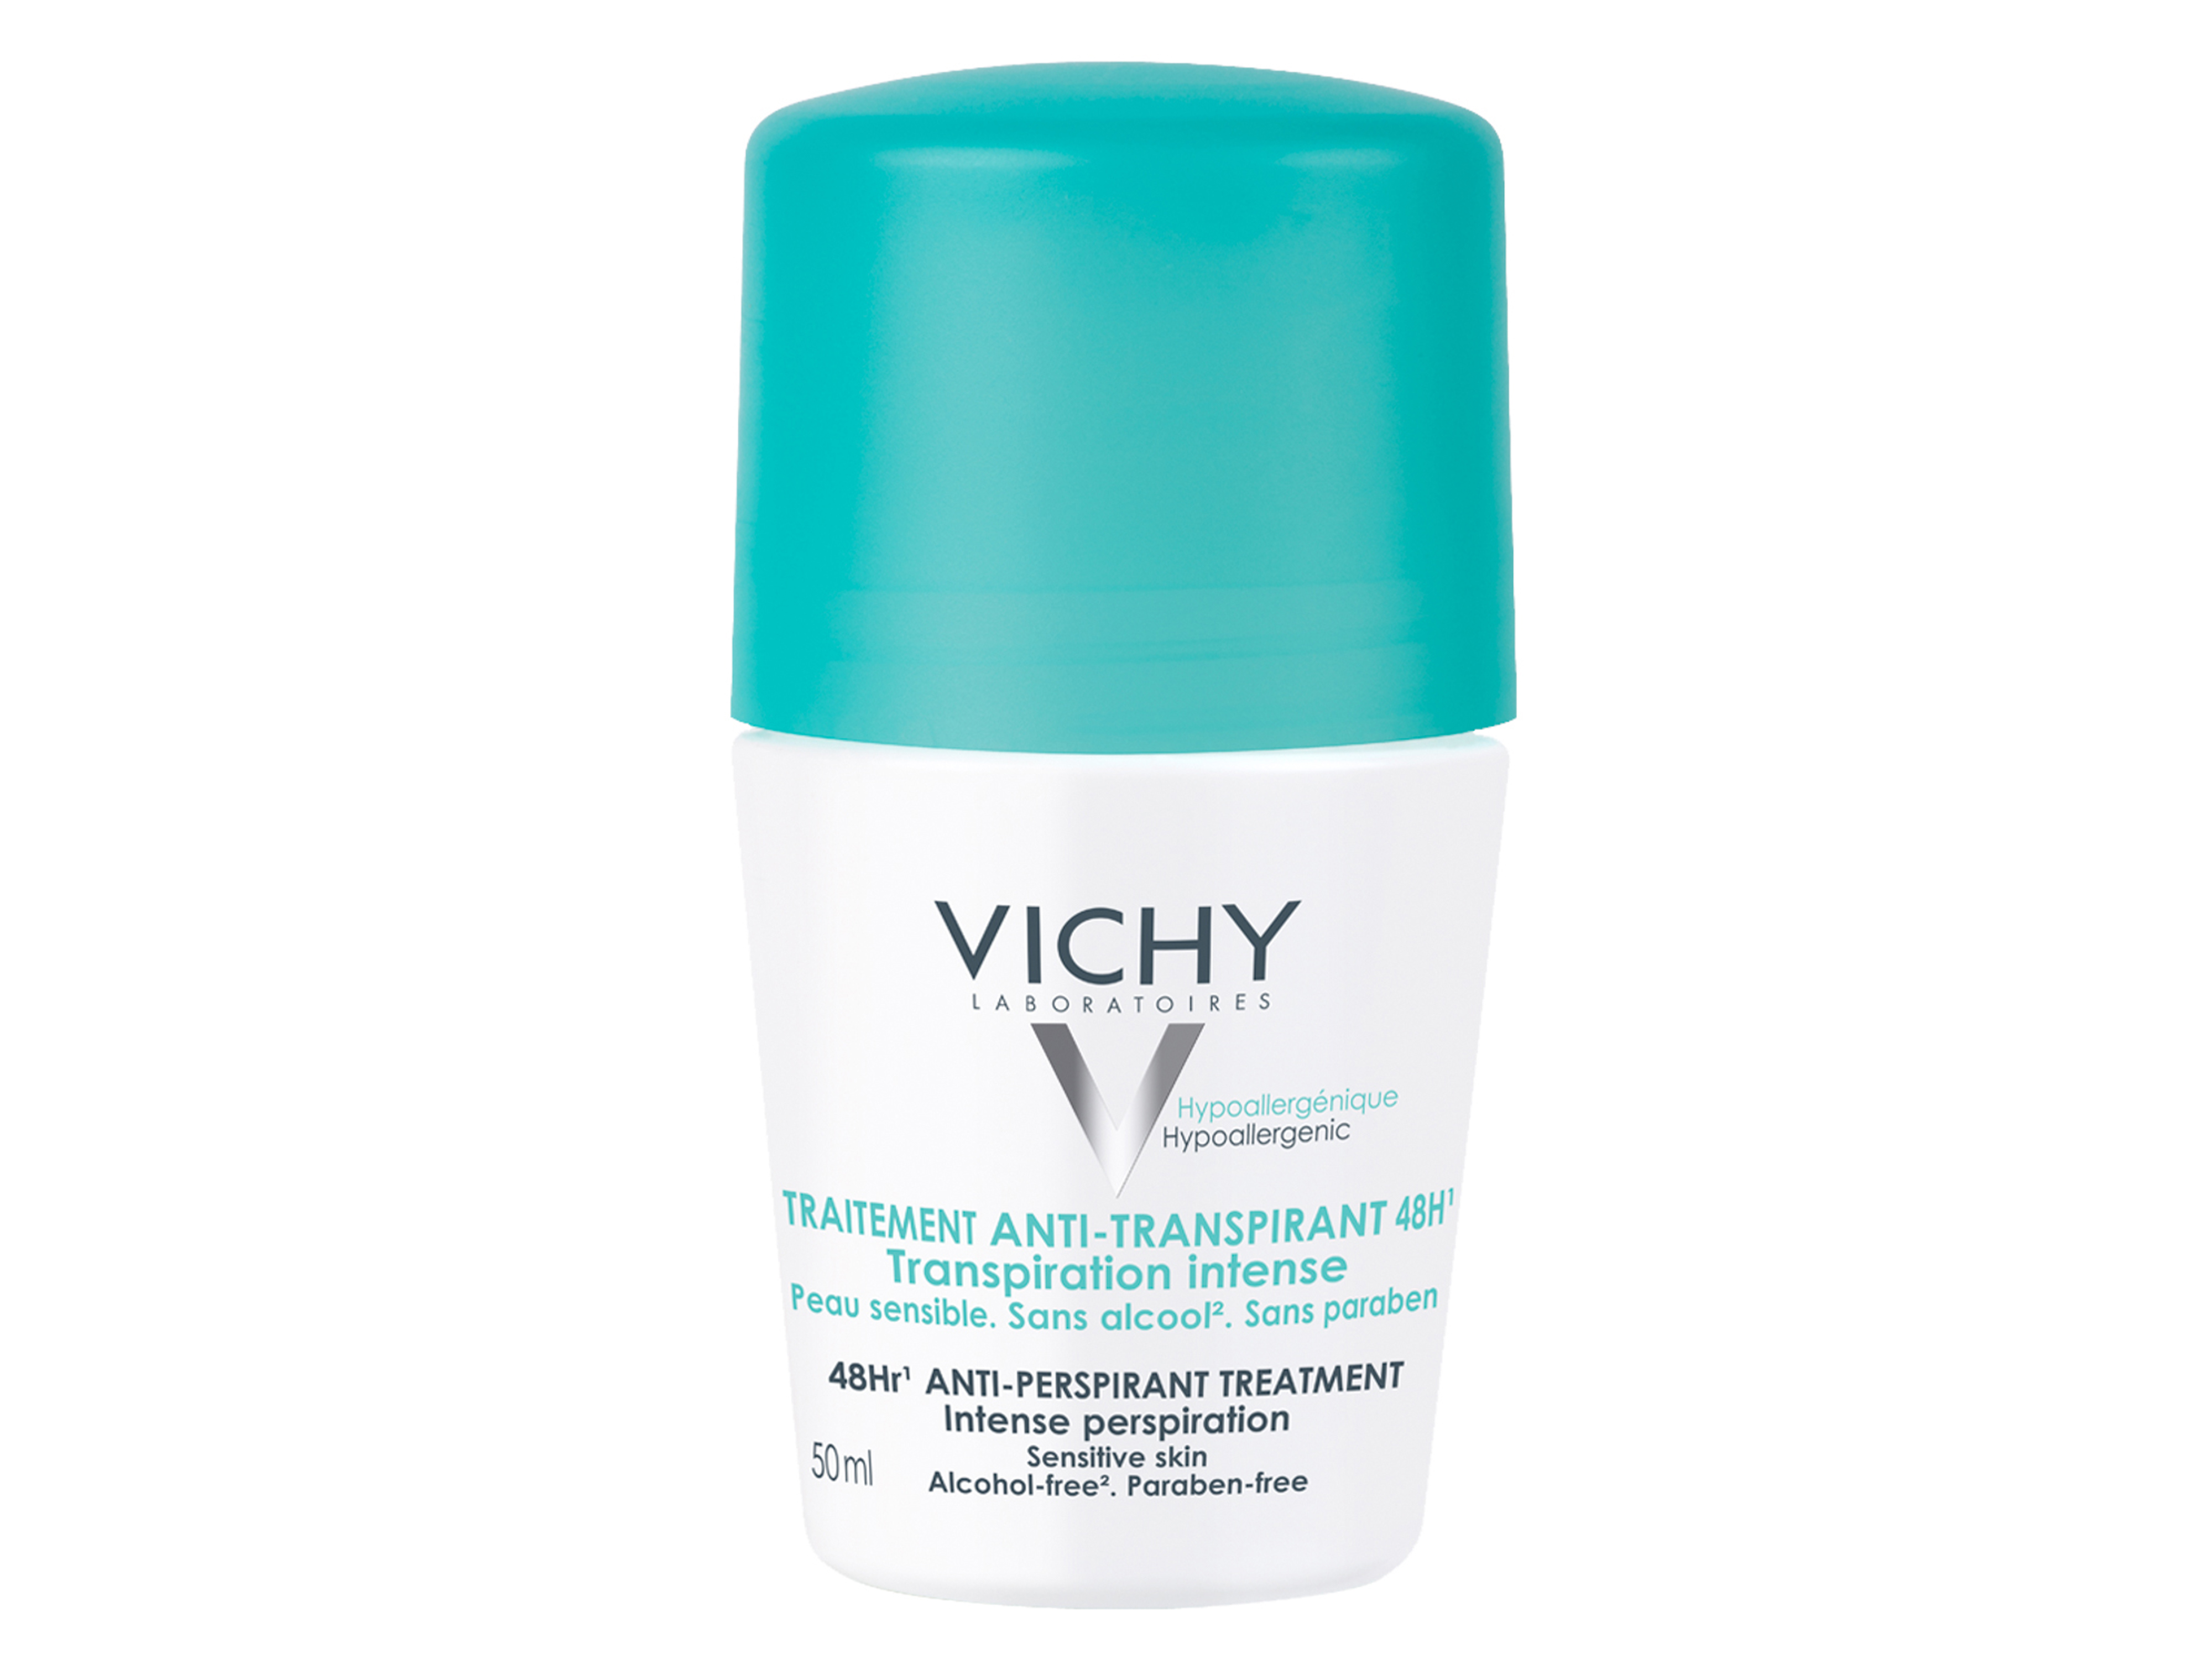 Vichy Anti-Perspirant Treatment Intense Perspiration 48H, 50 ml